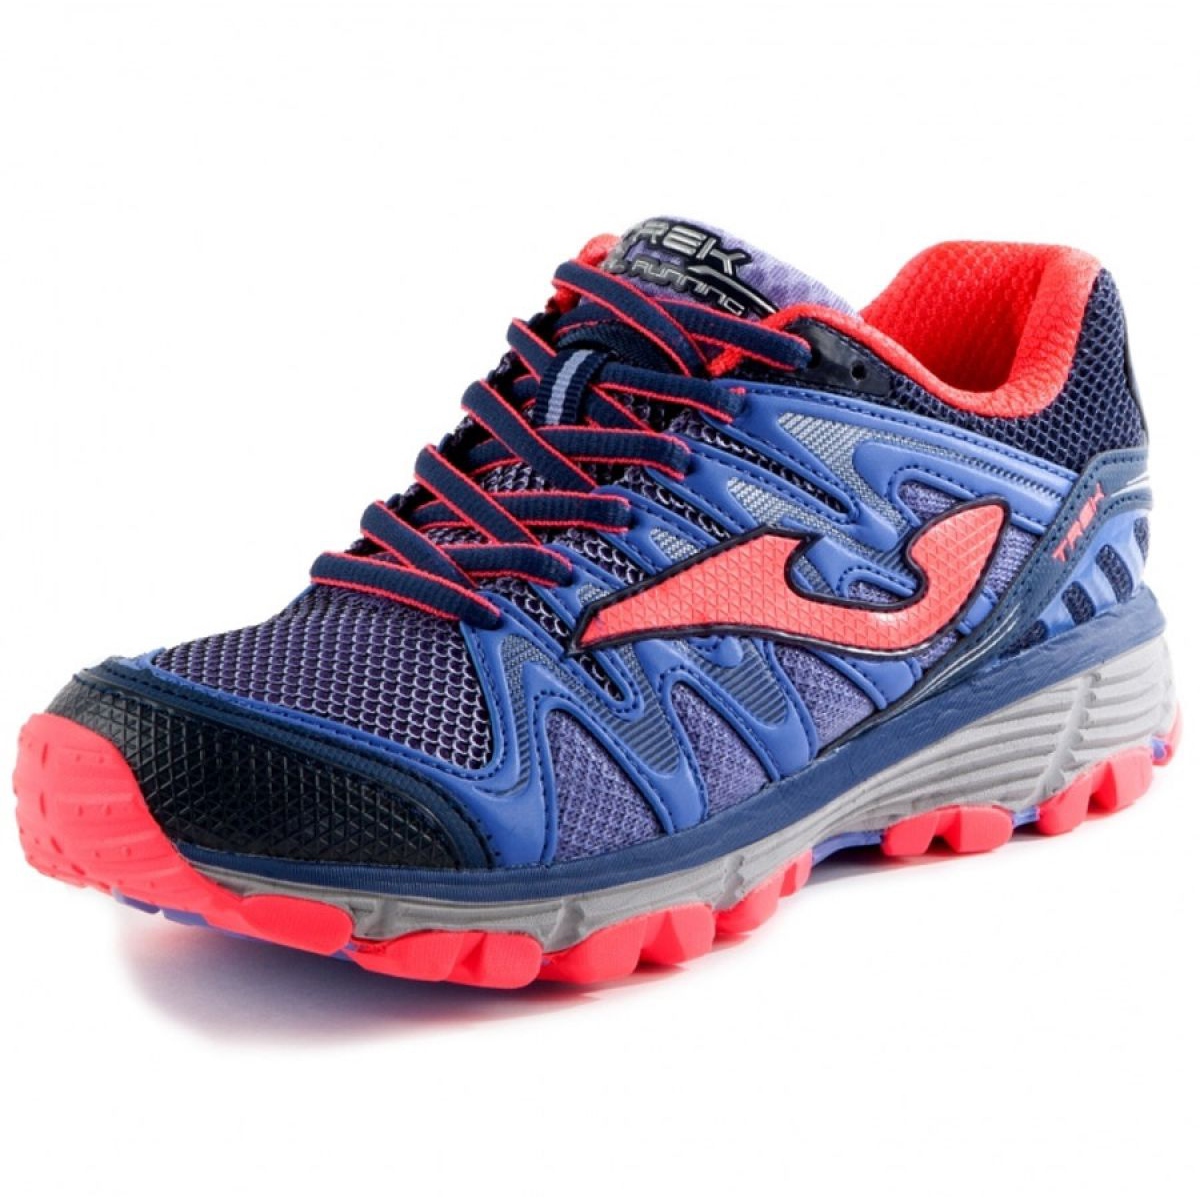 Joma Trek Lady W Tk.Trek-703 running shoes blue multicolored - KeeShoes